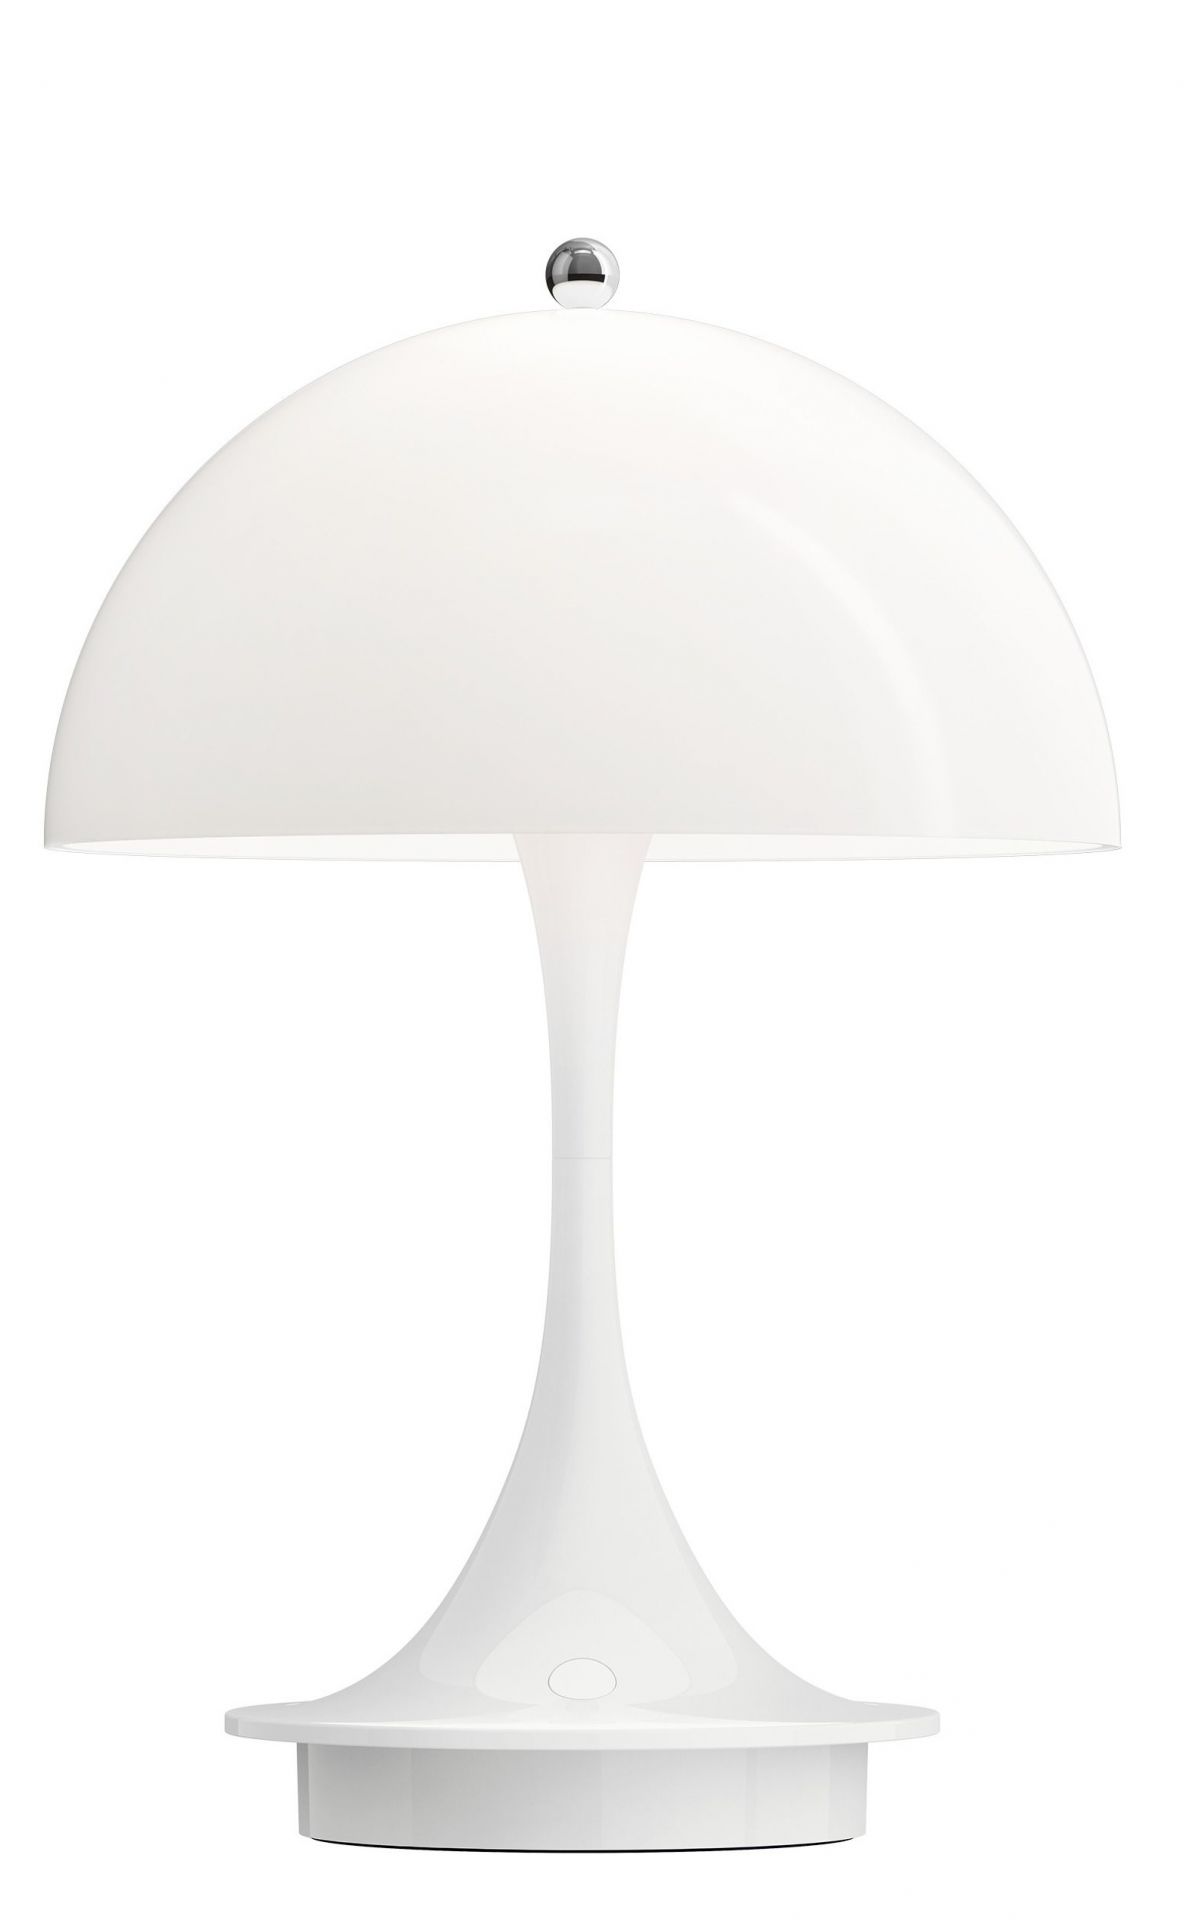 | Acryl Panthella table Acryl Poulsen lamp LOUIS | POULSEN SINGLE opal Portable LED 5744166661 Louis PIECES